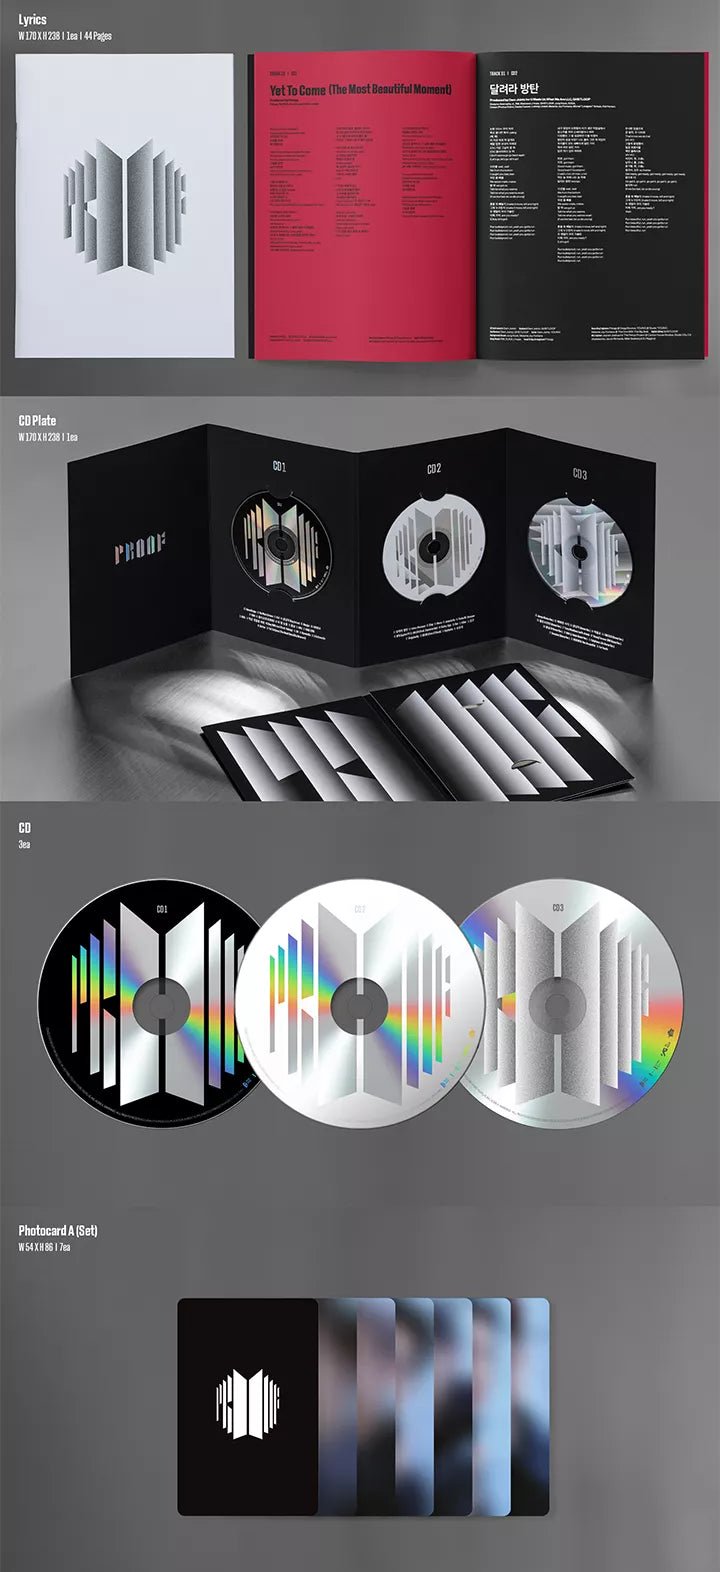 BTS - Proof Standard Edition (1st Anthology Album)